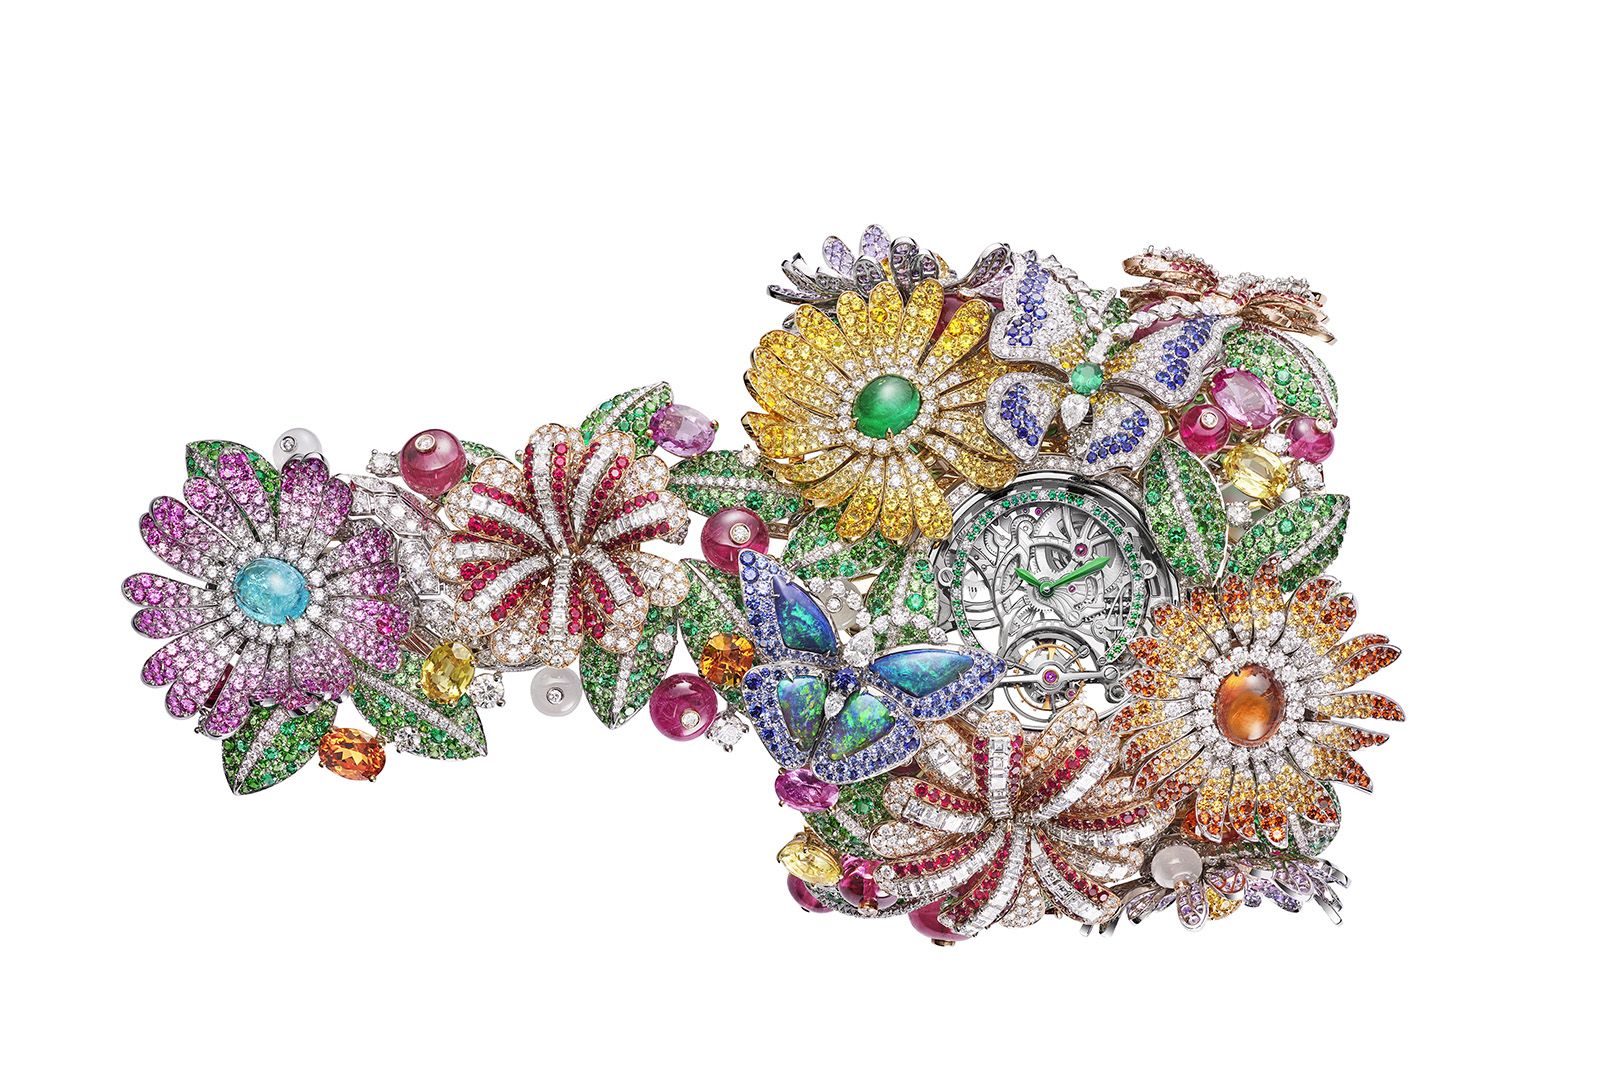 Bulgari Giardino Dell’Eden Tourbillon watch featuring 223-cts of cabochon Paraiba tourmaline, emeralds, garnets, pink tourmalines, opals, rubies, multicolour sapphires and diamonds